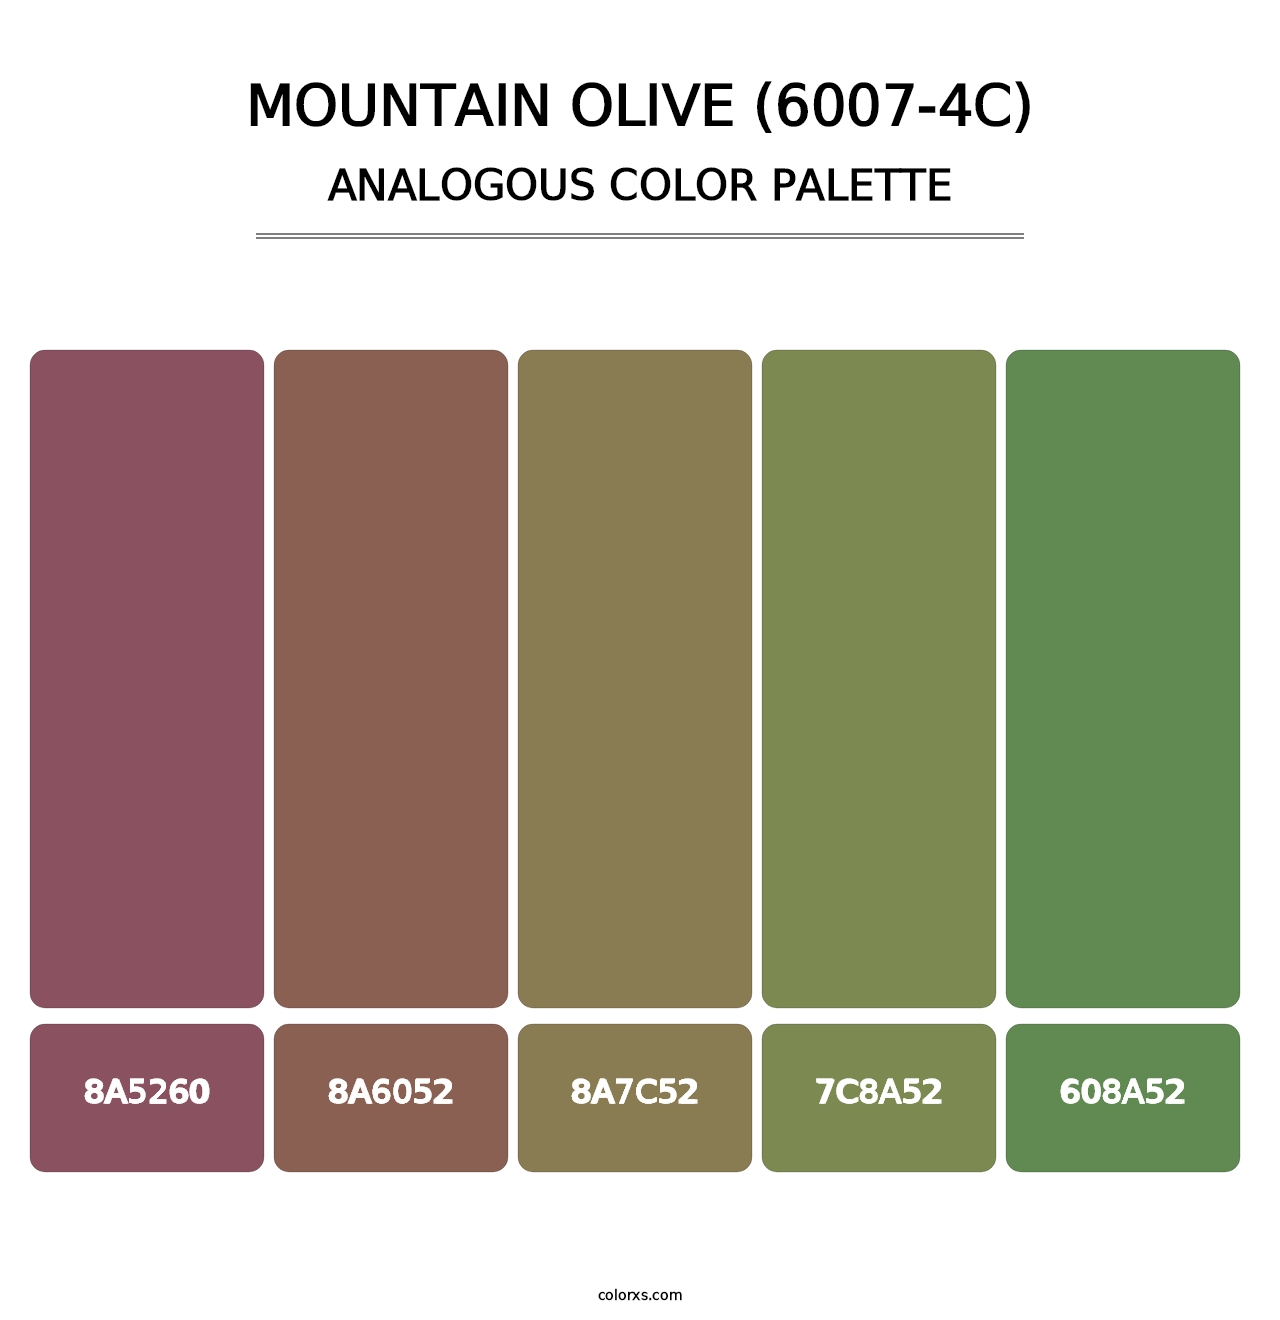 Mountain Olive (6007-4C) - Analogous Color Palette